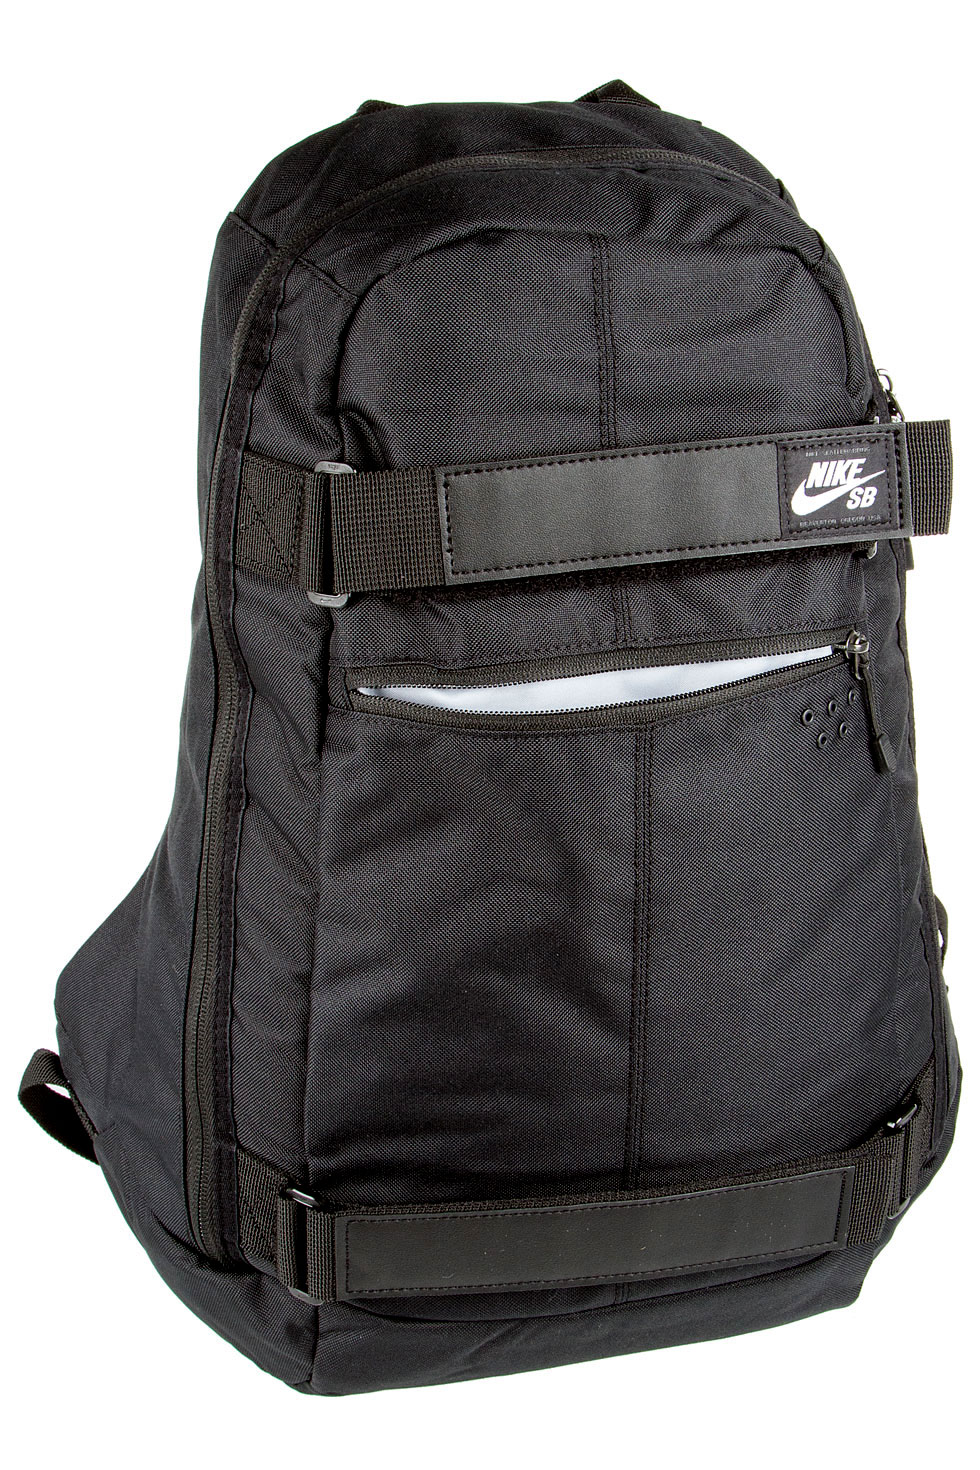 Nike SB Embarca Medium Backpack 23L (black black white) buy at skatedeluxe